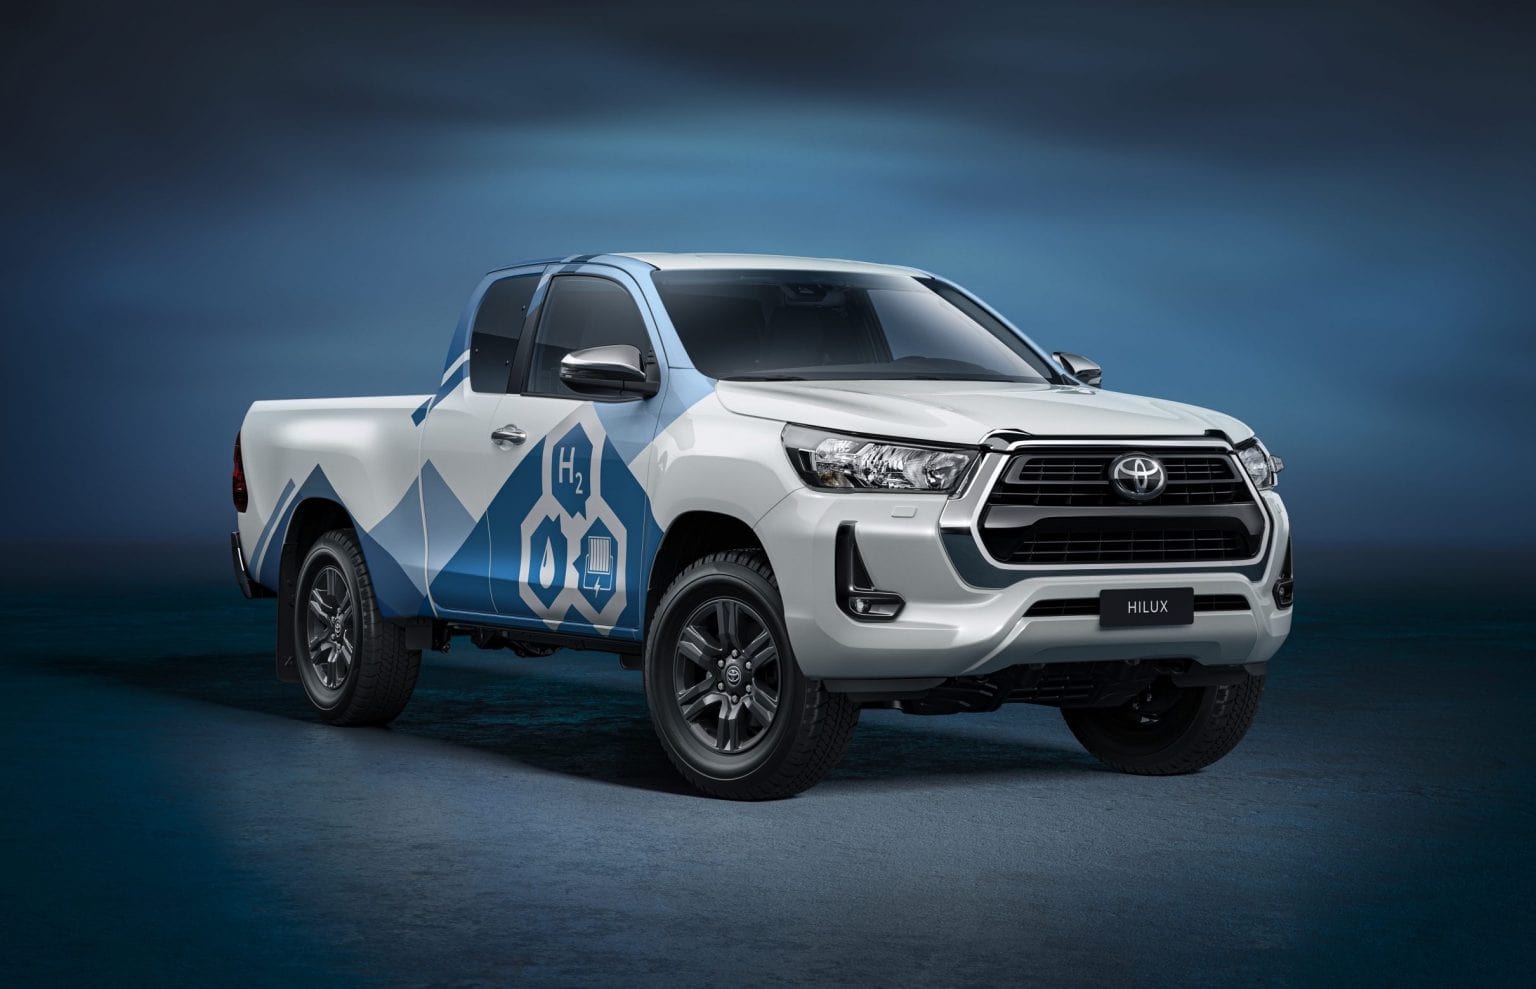 Toyota & Hyundai Sign Deal to Develop Hydrogen Refueling Infrastructure in Australia